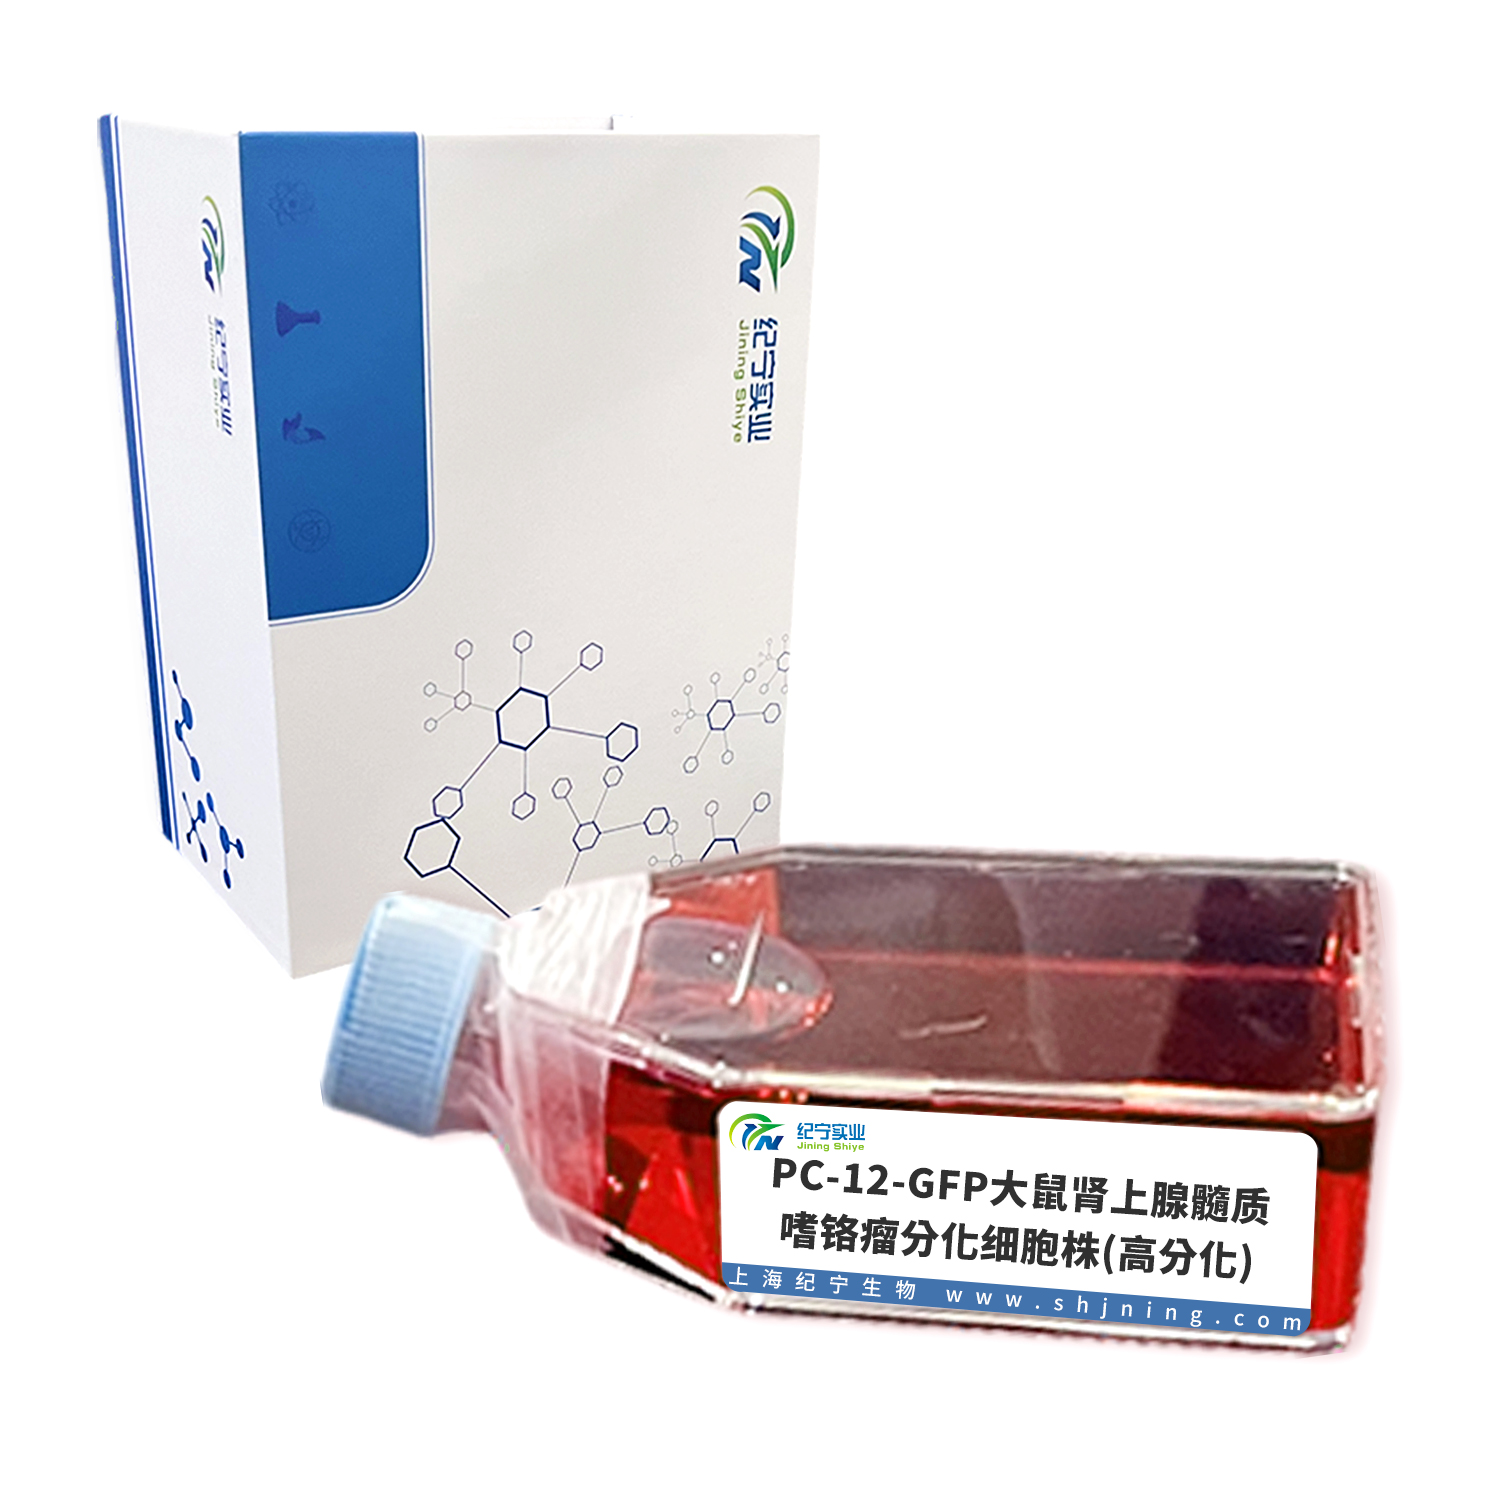 PC-12-GFP大鼠肾上腺髓质嗜铬瘤分化细胞株(高分化)